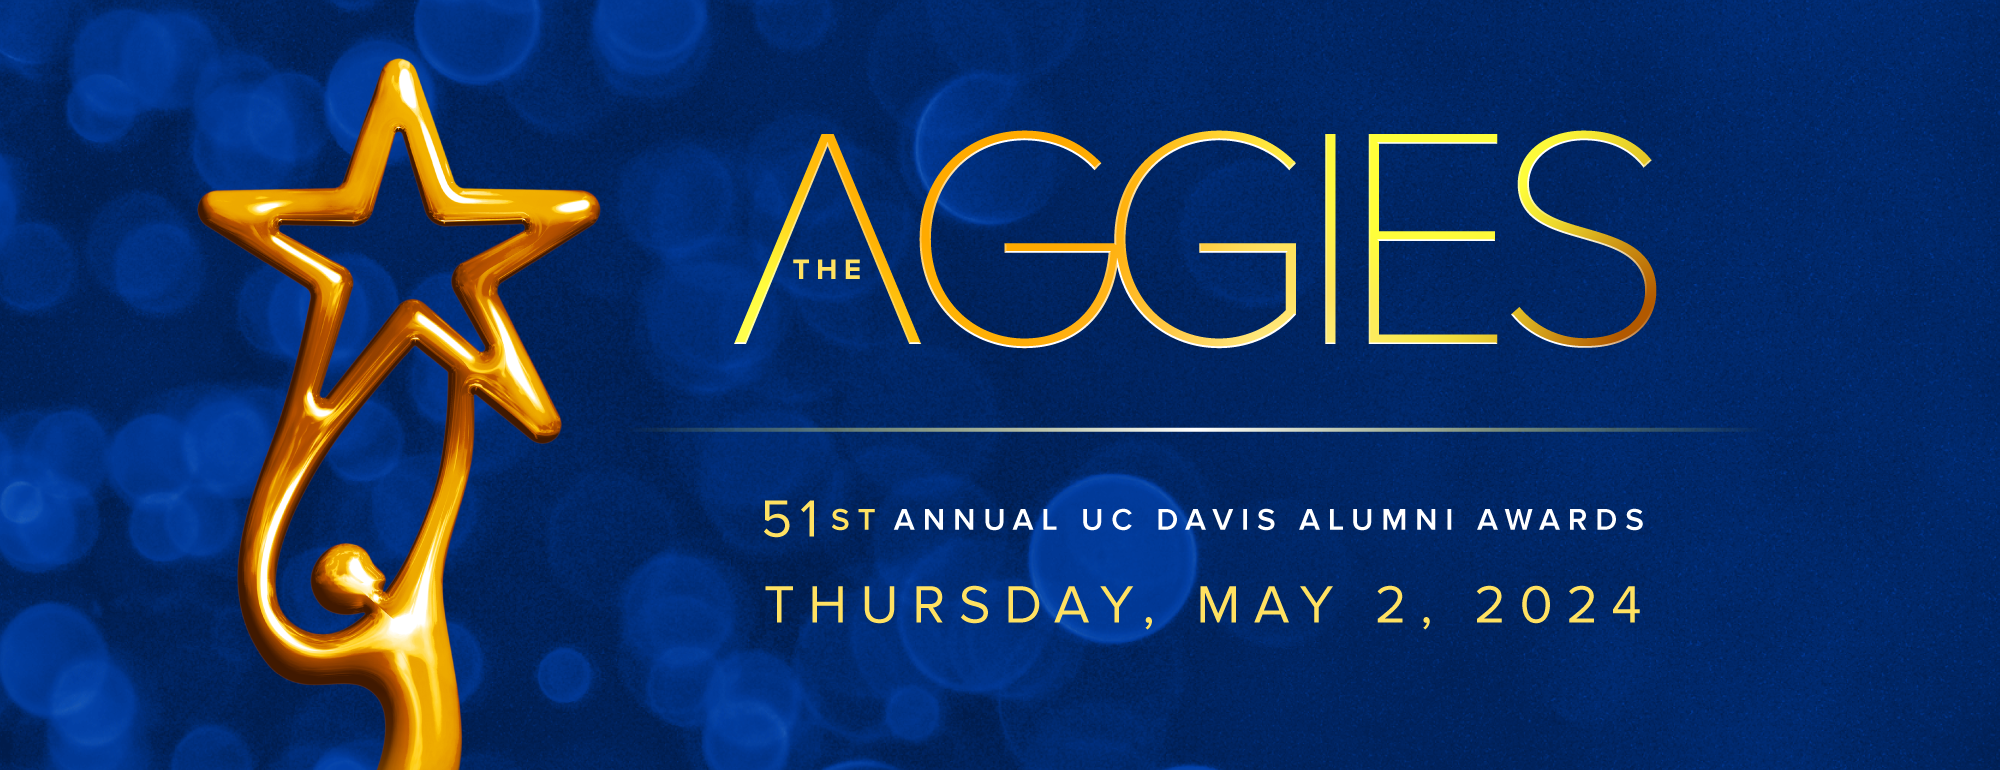 the aggies 51st annual uc davis alumni awards thursday, may 2, 2024